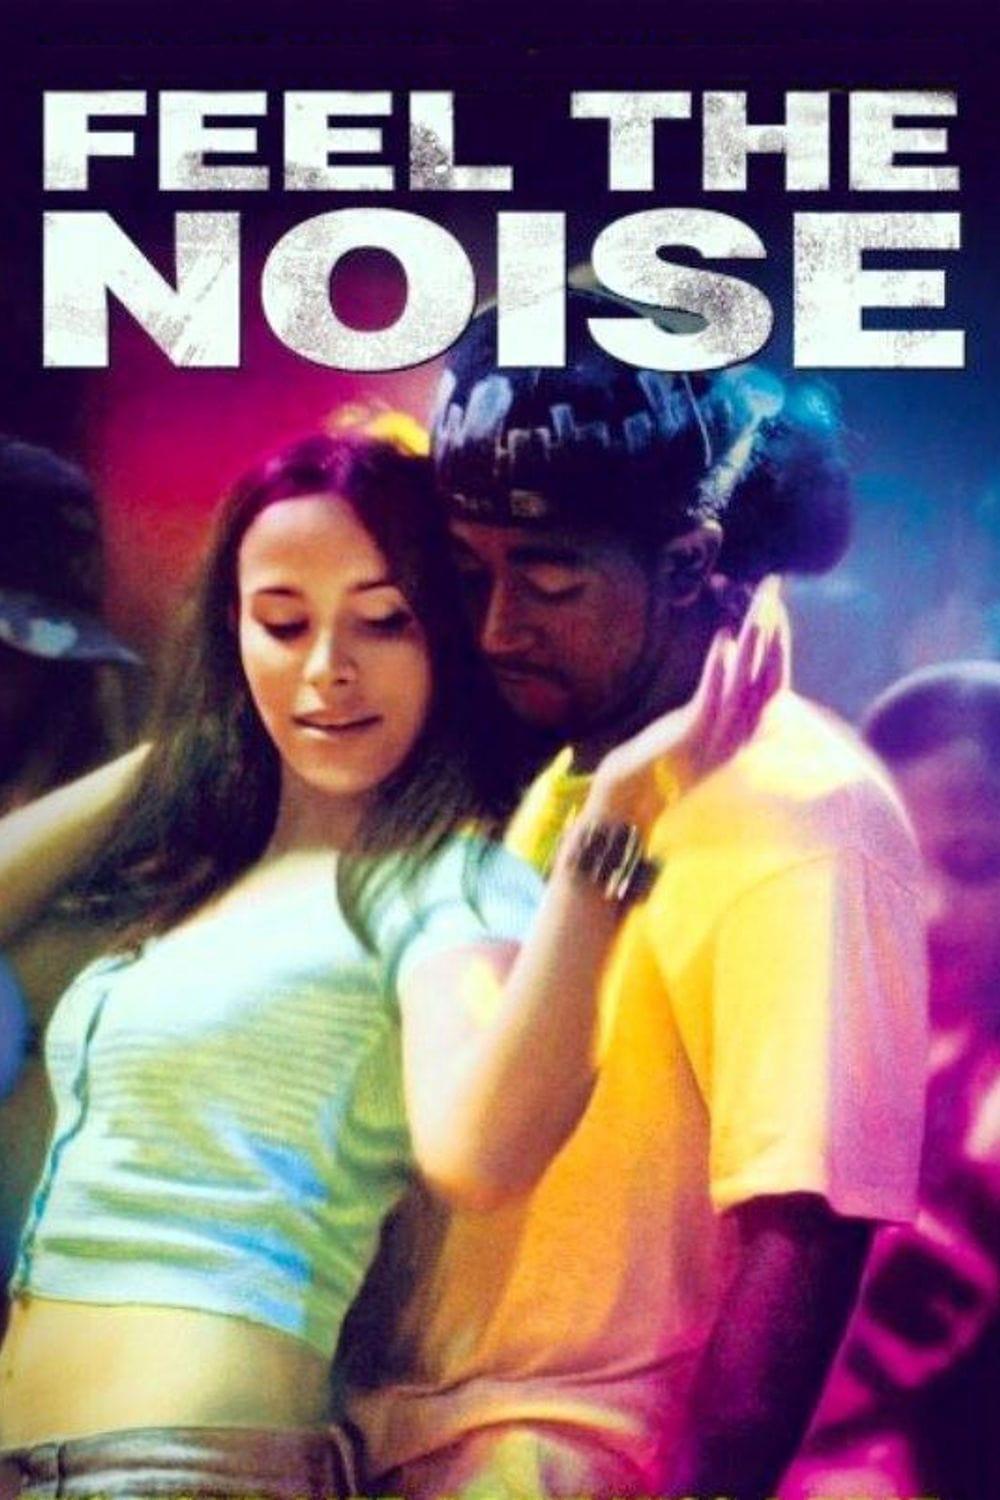 Feel The Noise poster